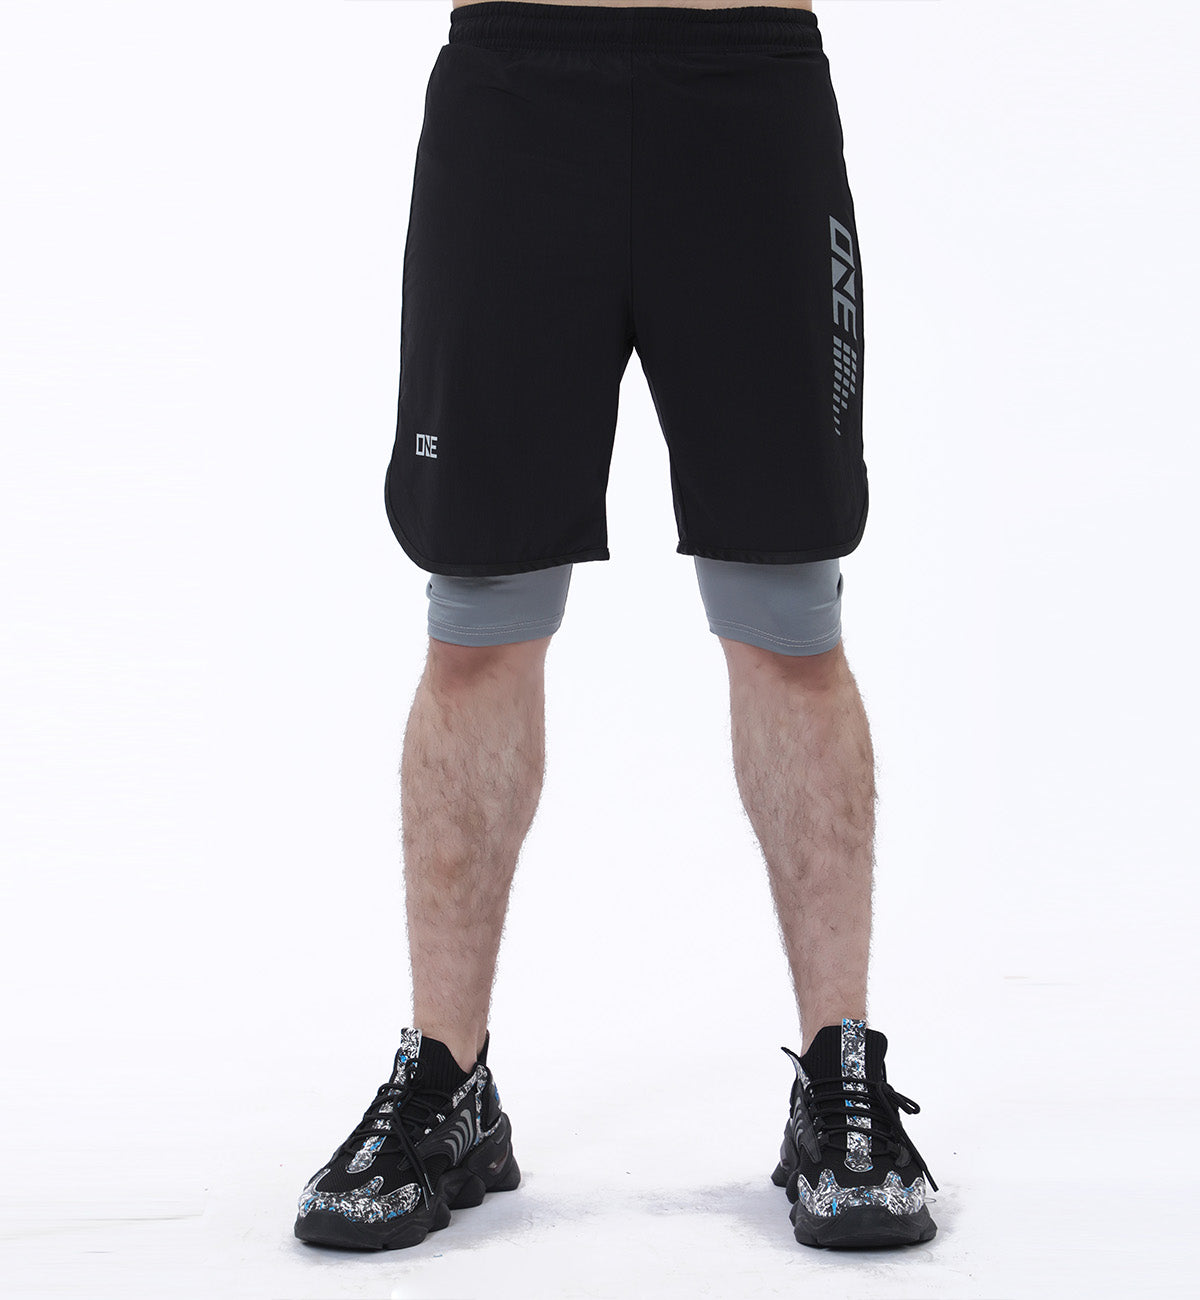 Double Shorts Black/Grey (7606689955991)